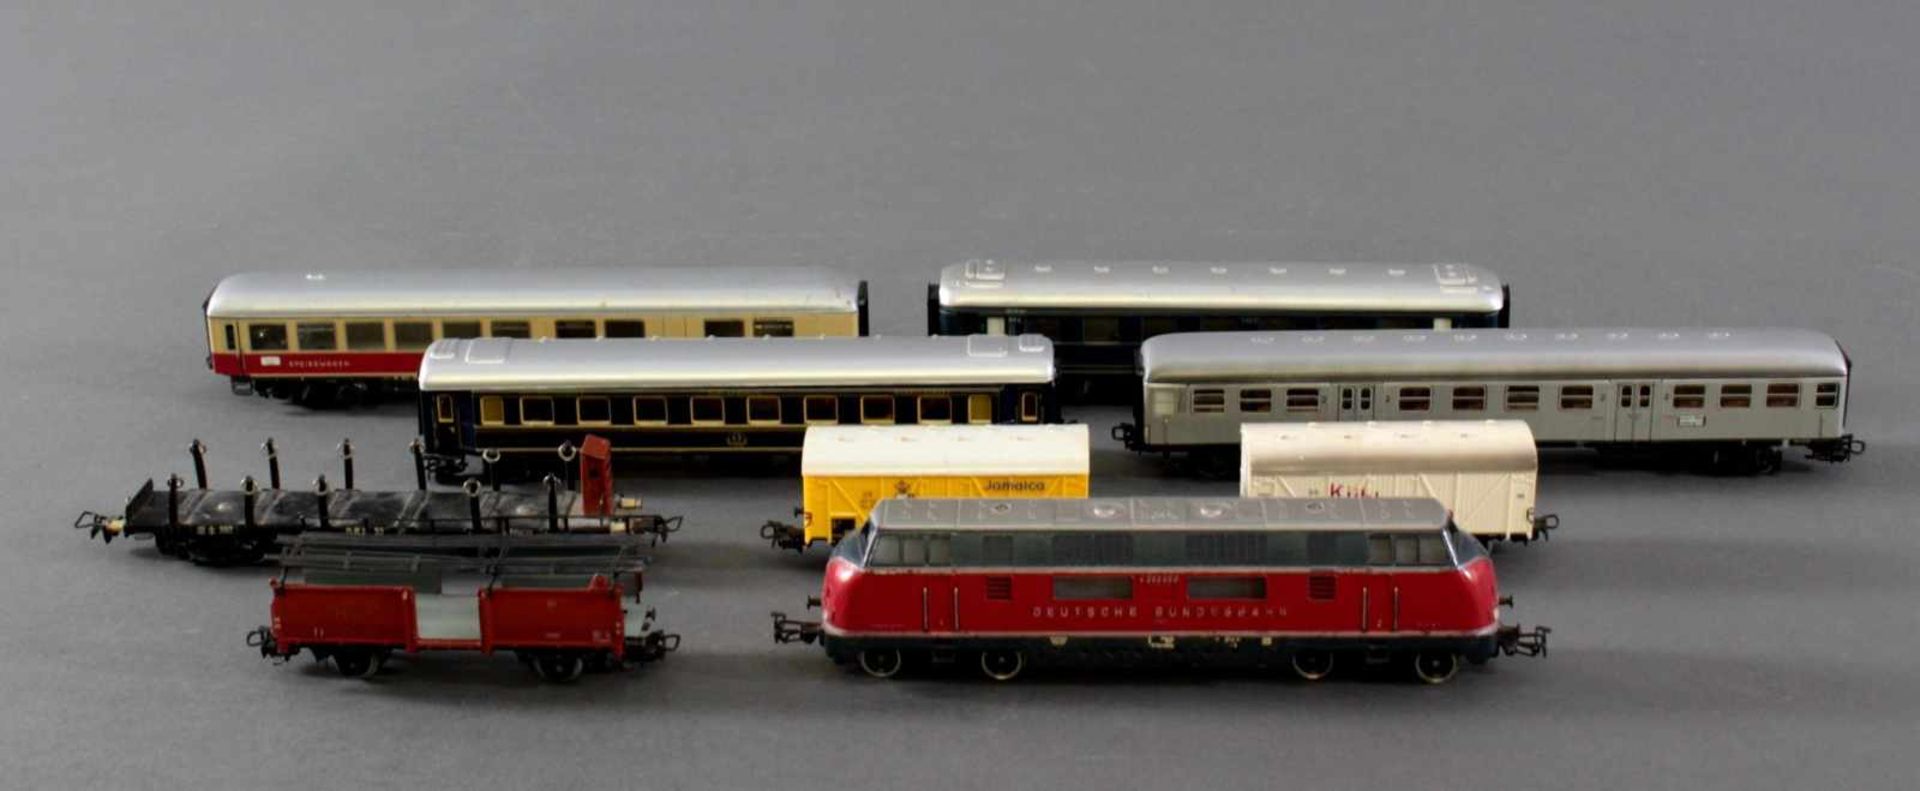 Märklin E-Lok V 2000 mit 5 Güter-, 2 Personenwaggons und einem Speisewagen, Spur H0E-Lok in rot, 5